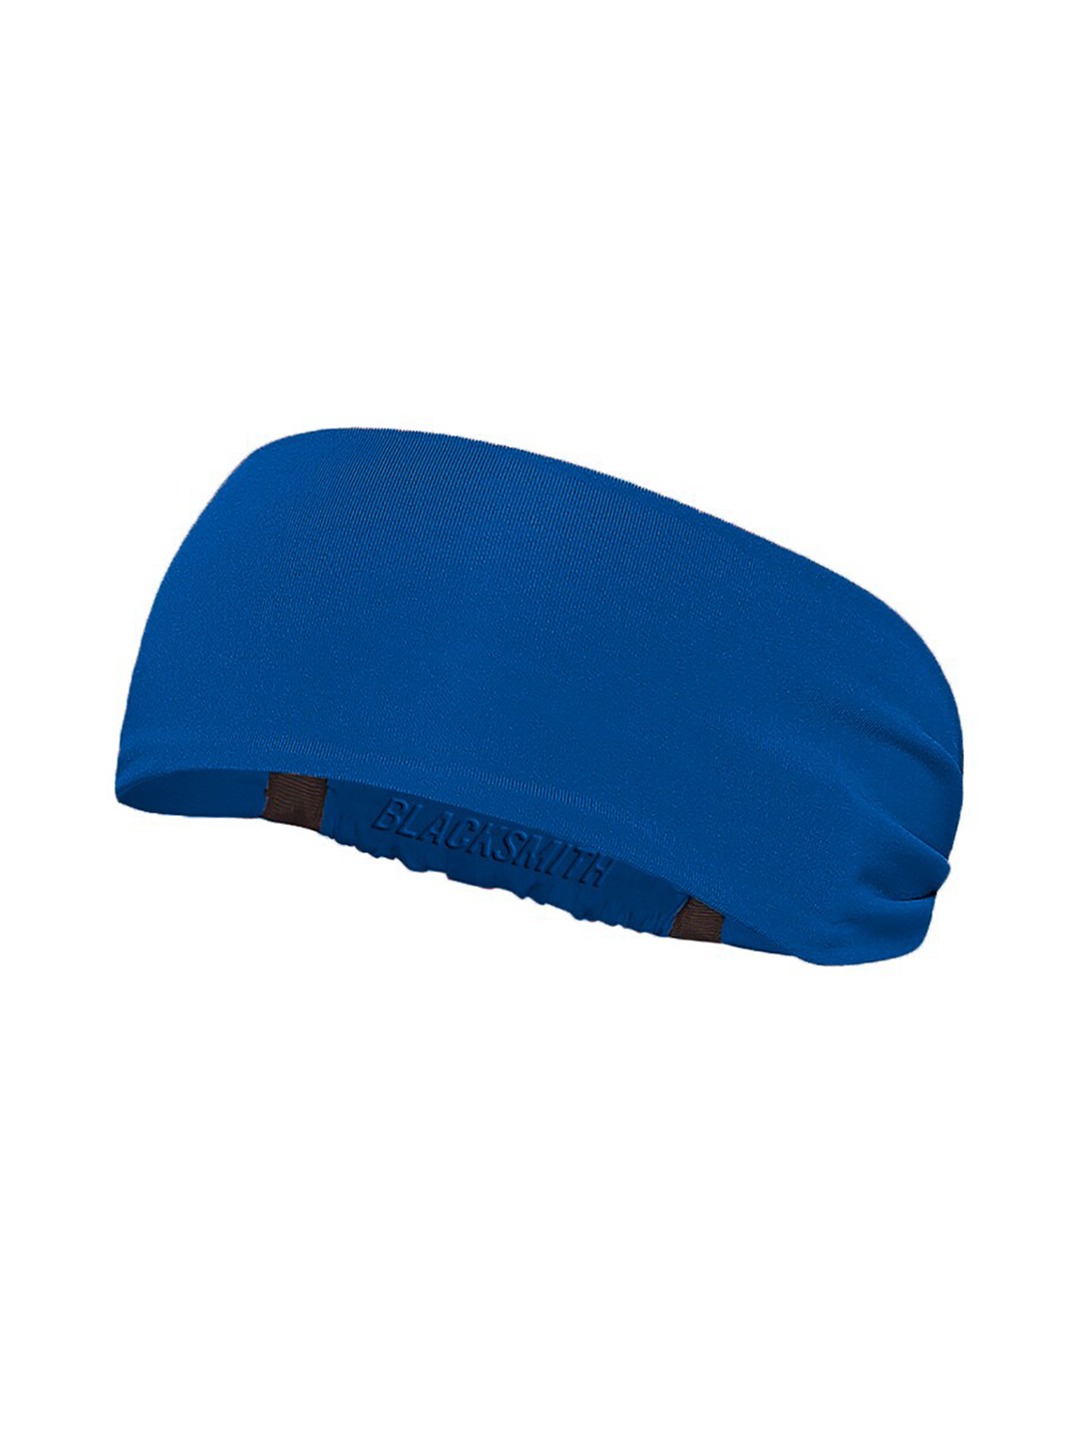 Accessories Headband | Blacksmith Unisex Blue Advanced Non Slip Headband - GC33741